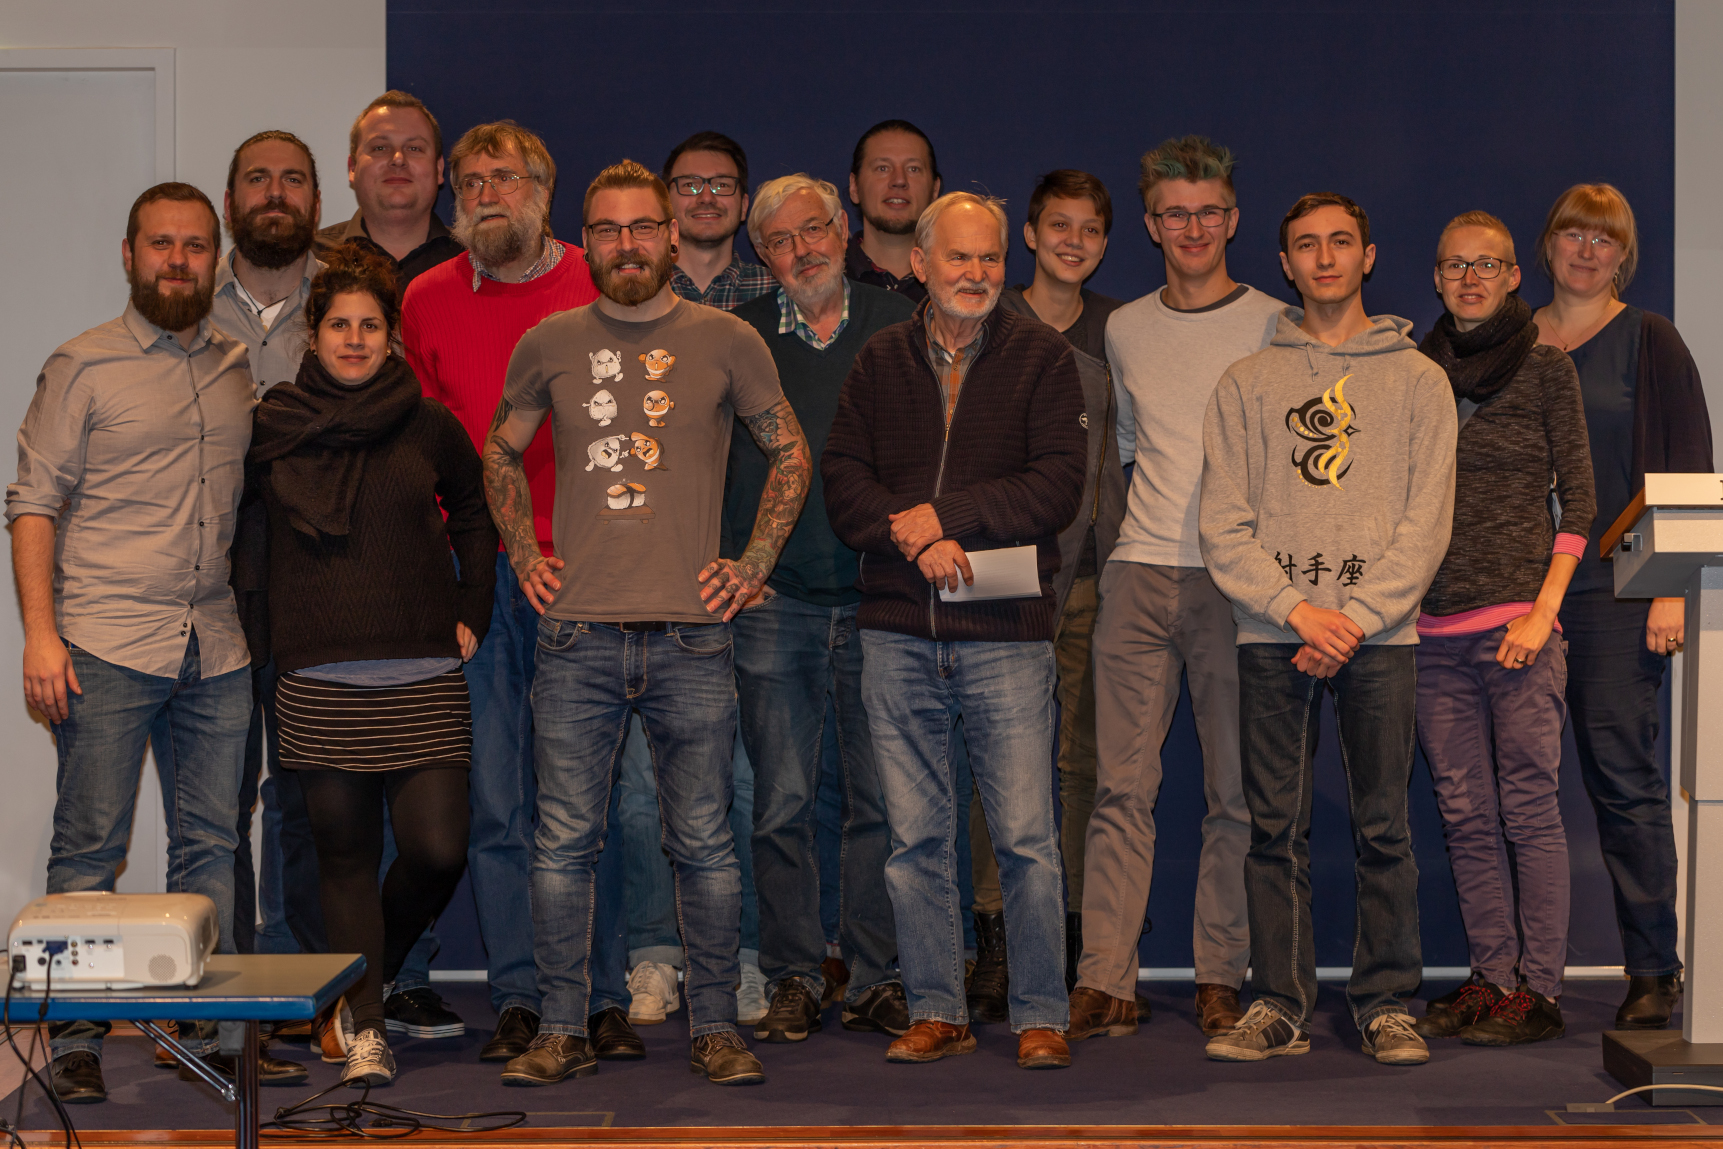 Gruppenfoto aller Gründungsmitglieder (+ Erwin Schmid im roten Pulli), Foto: © Hansjörg Albrecht